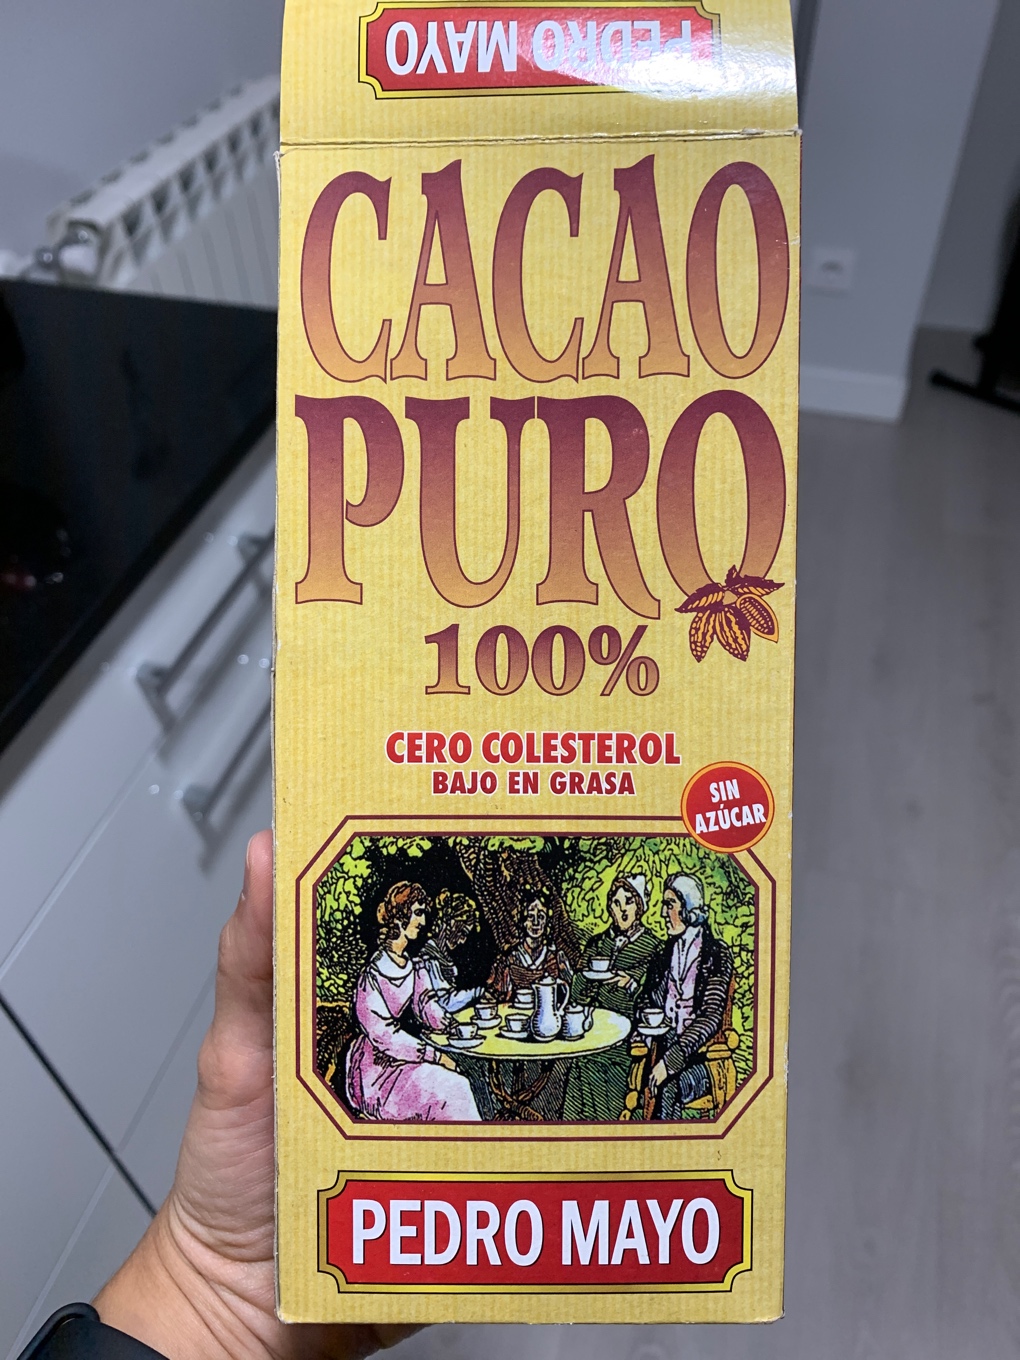 Cacao puro